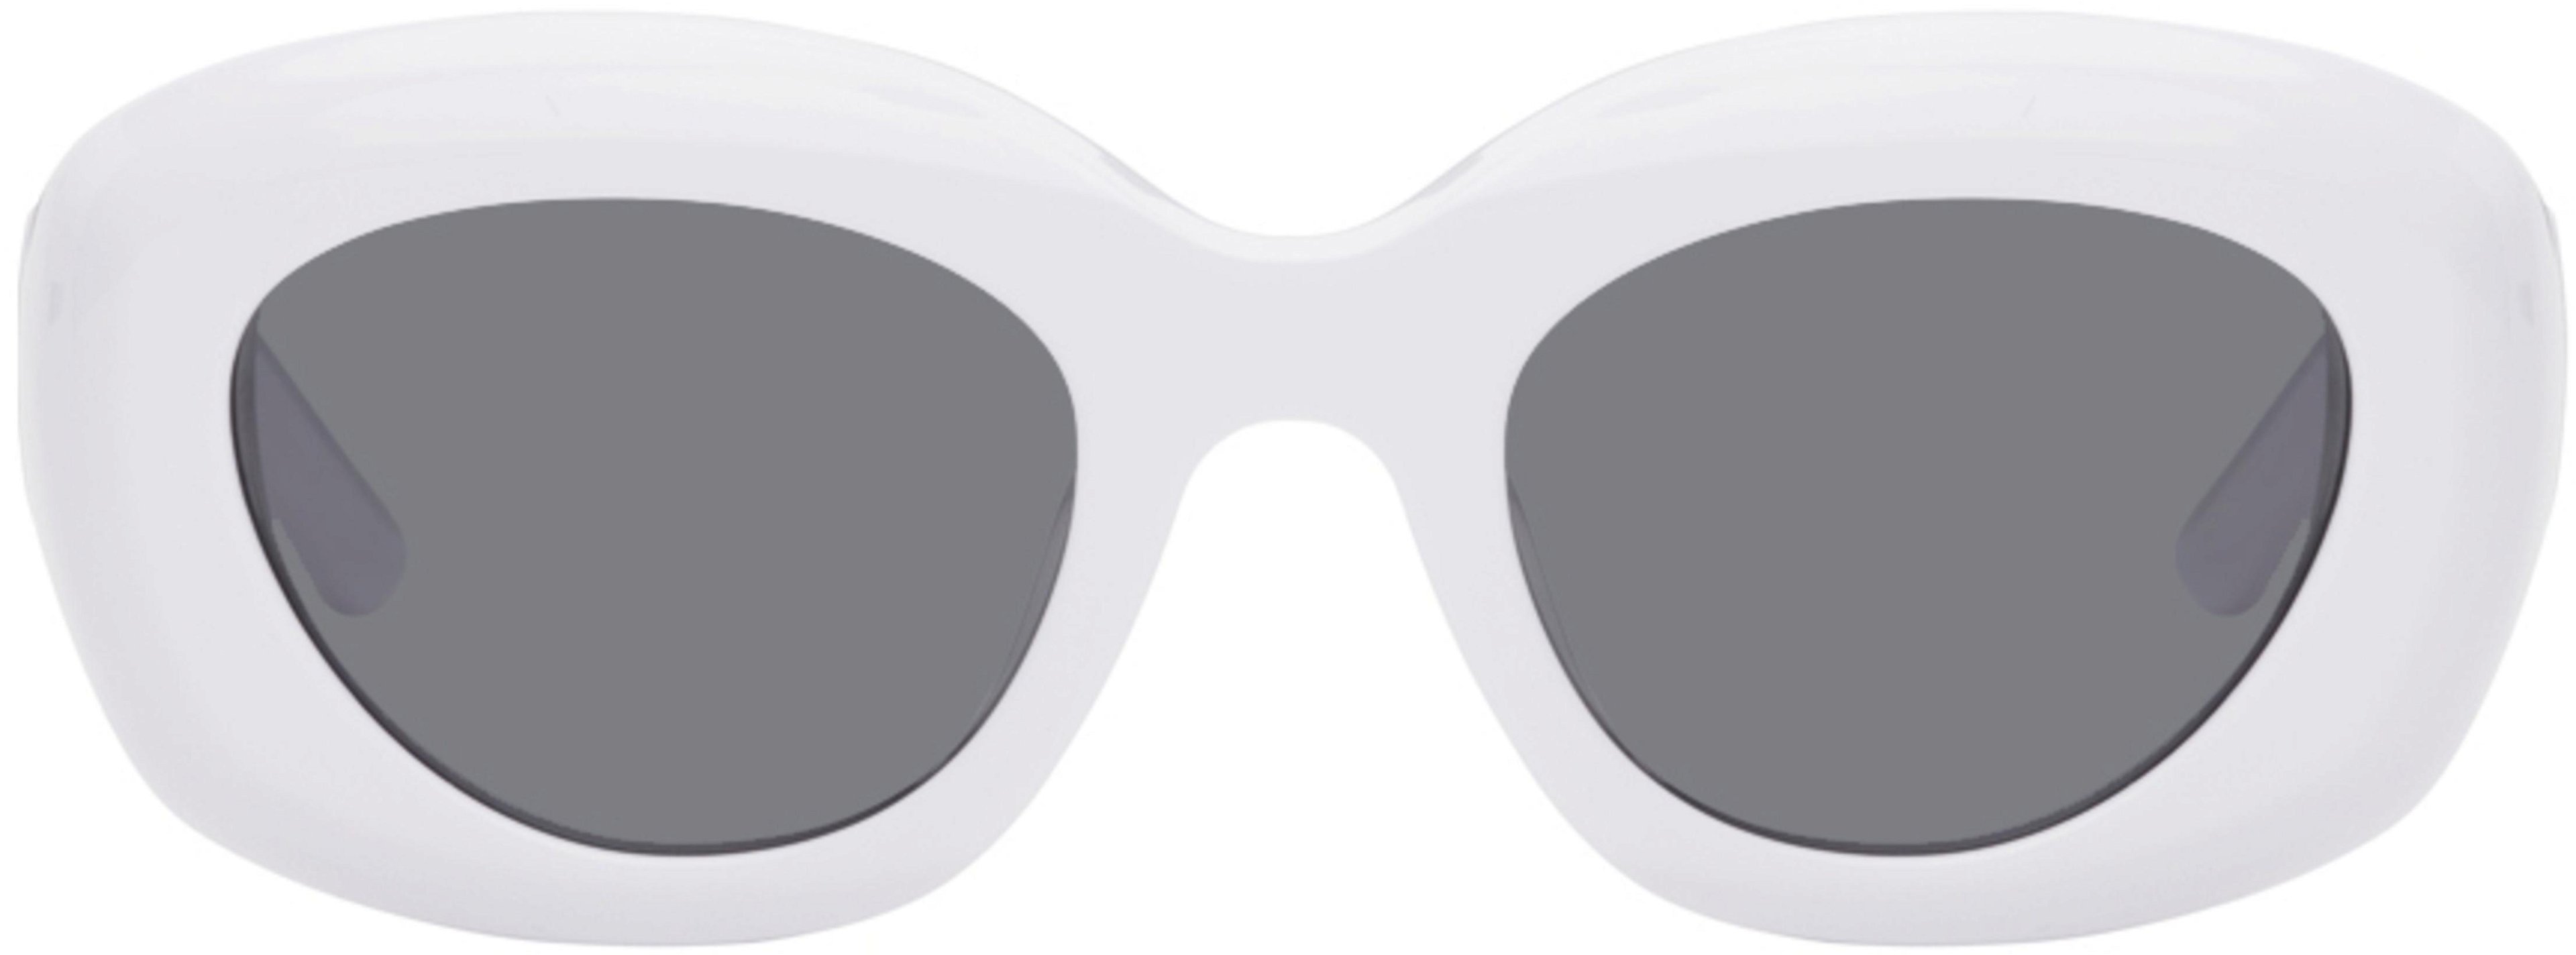 White Portal Sunglasses by BONNIE CLYDE